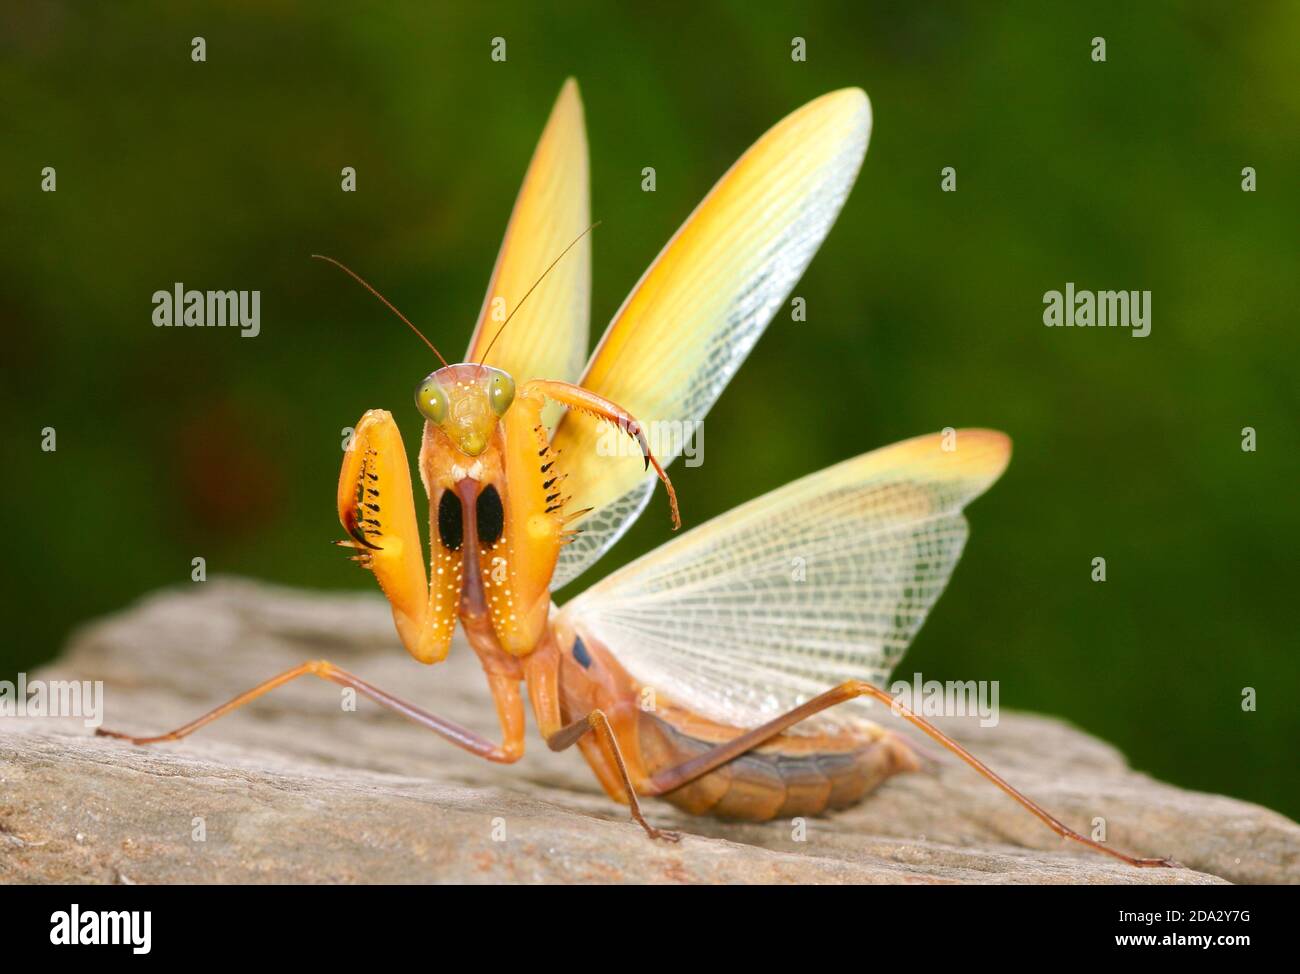 Mantis preying europea (mantis religiosa), morfa amarilla rara, postura defensiva, Alemania Foto de stock